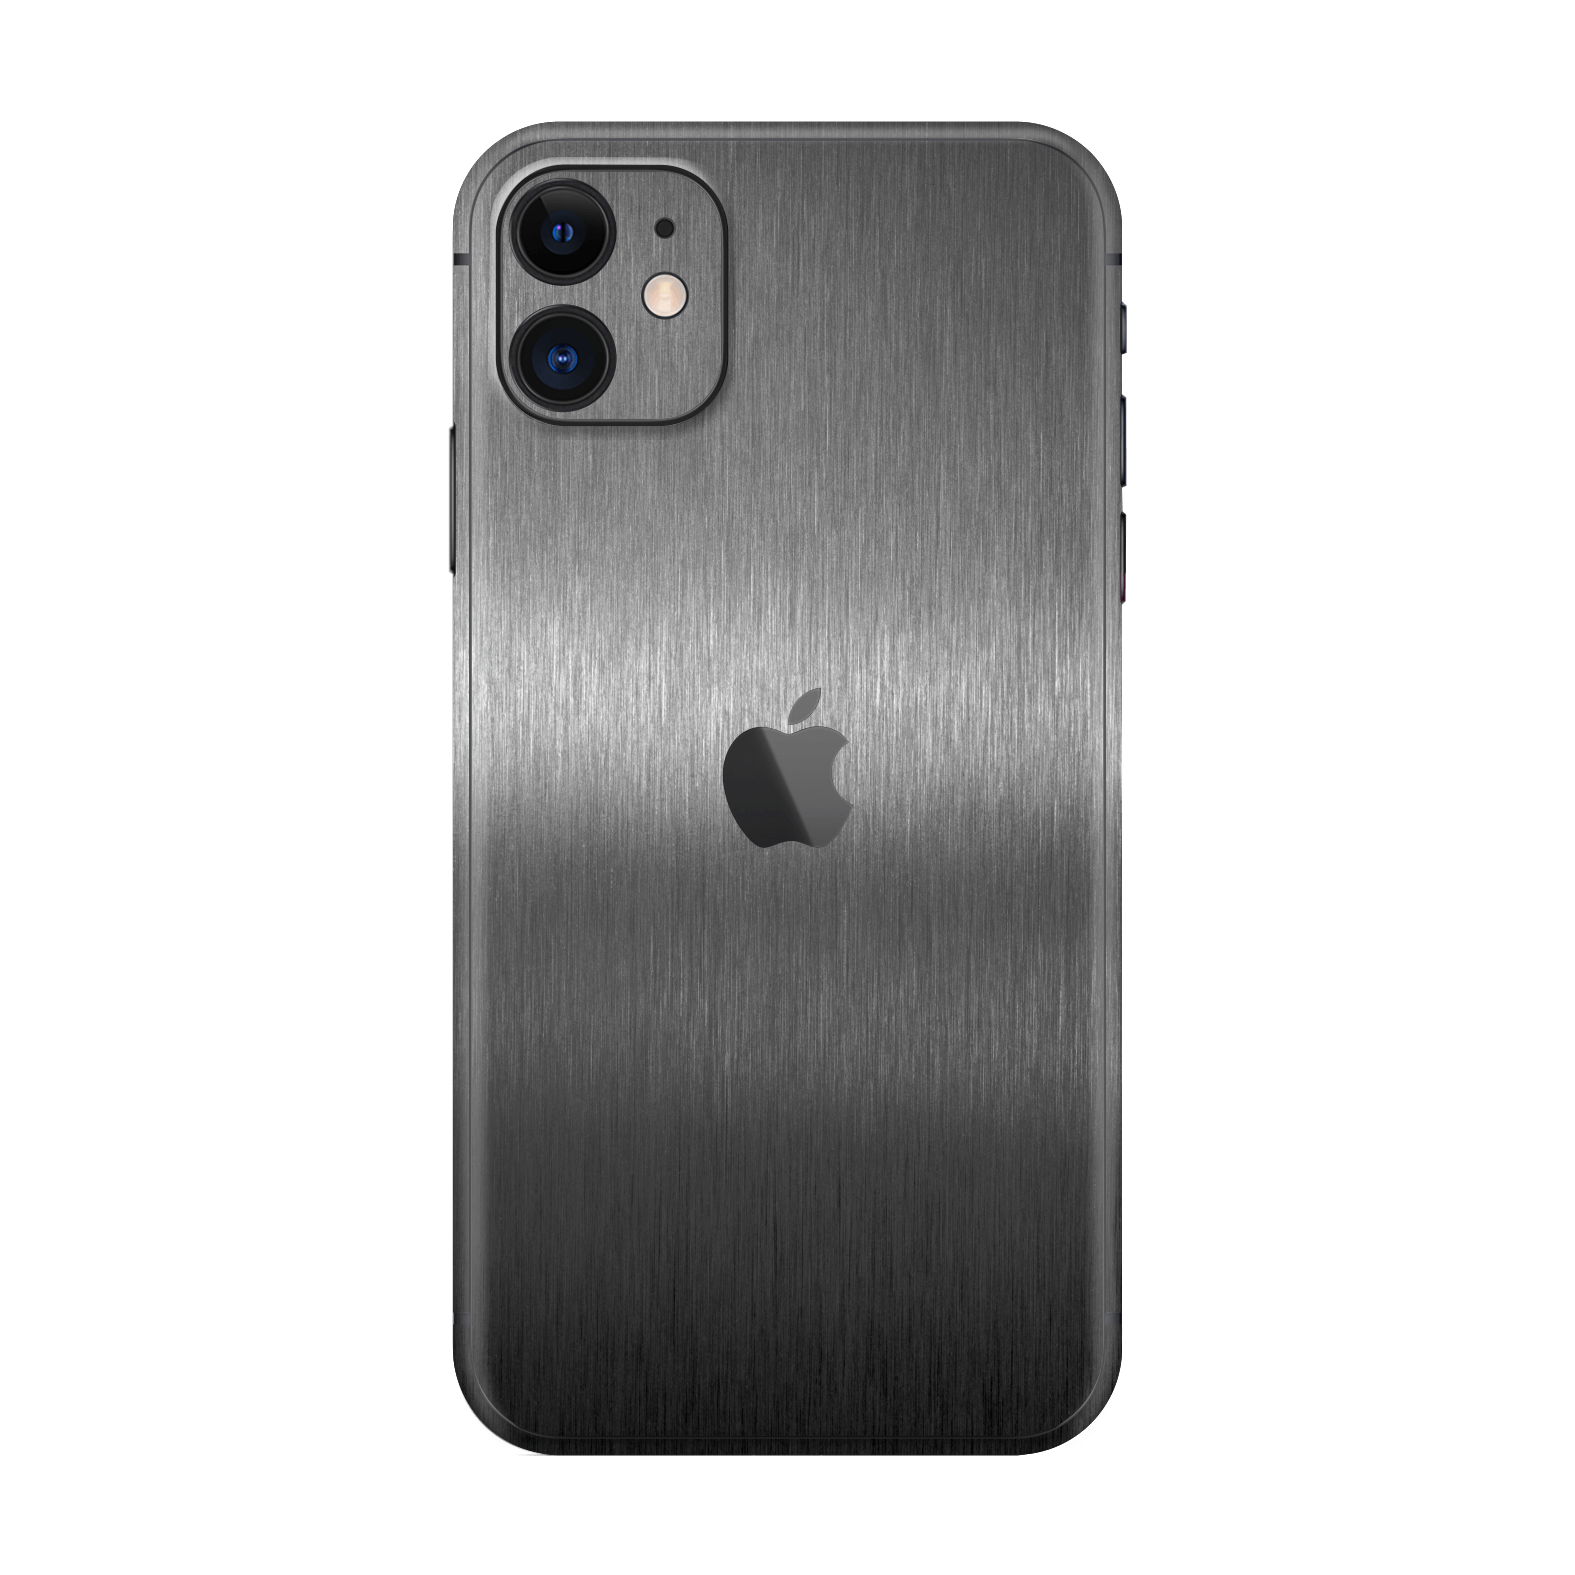 iPhone 11 Brushed Metal Titanium Metallic Skin Wrap Sticker Decal Cover Protector by EasySkinz | EasySkinz.com